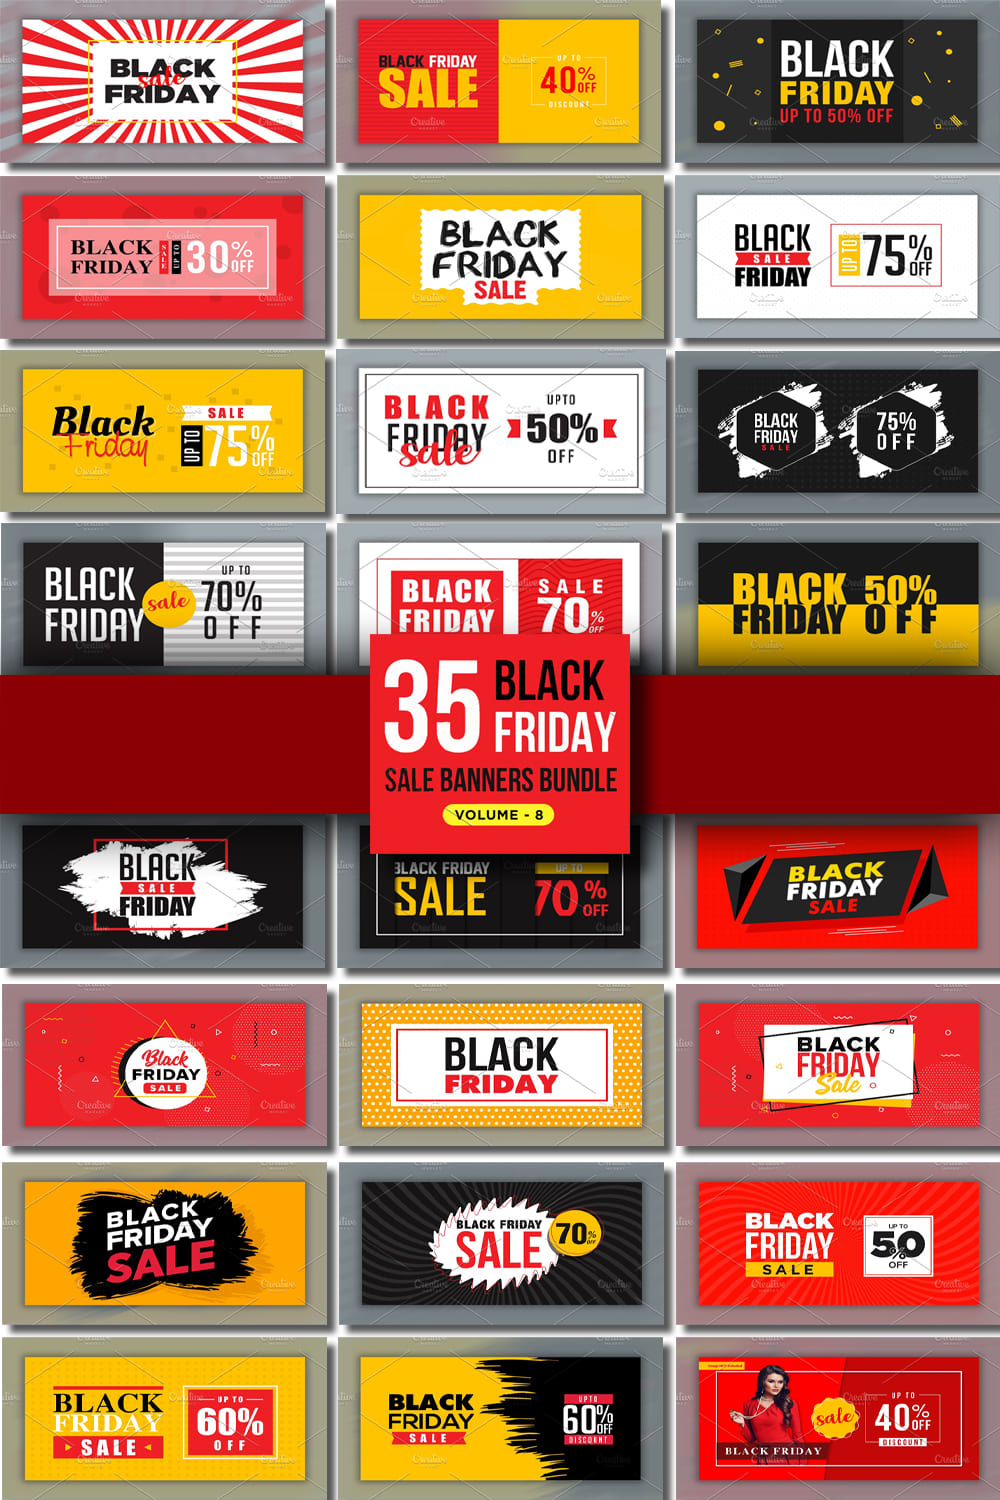 5475631 black friday sale banners v 8 pinterest 1000 1500 536